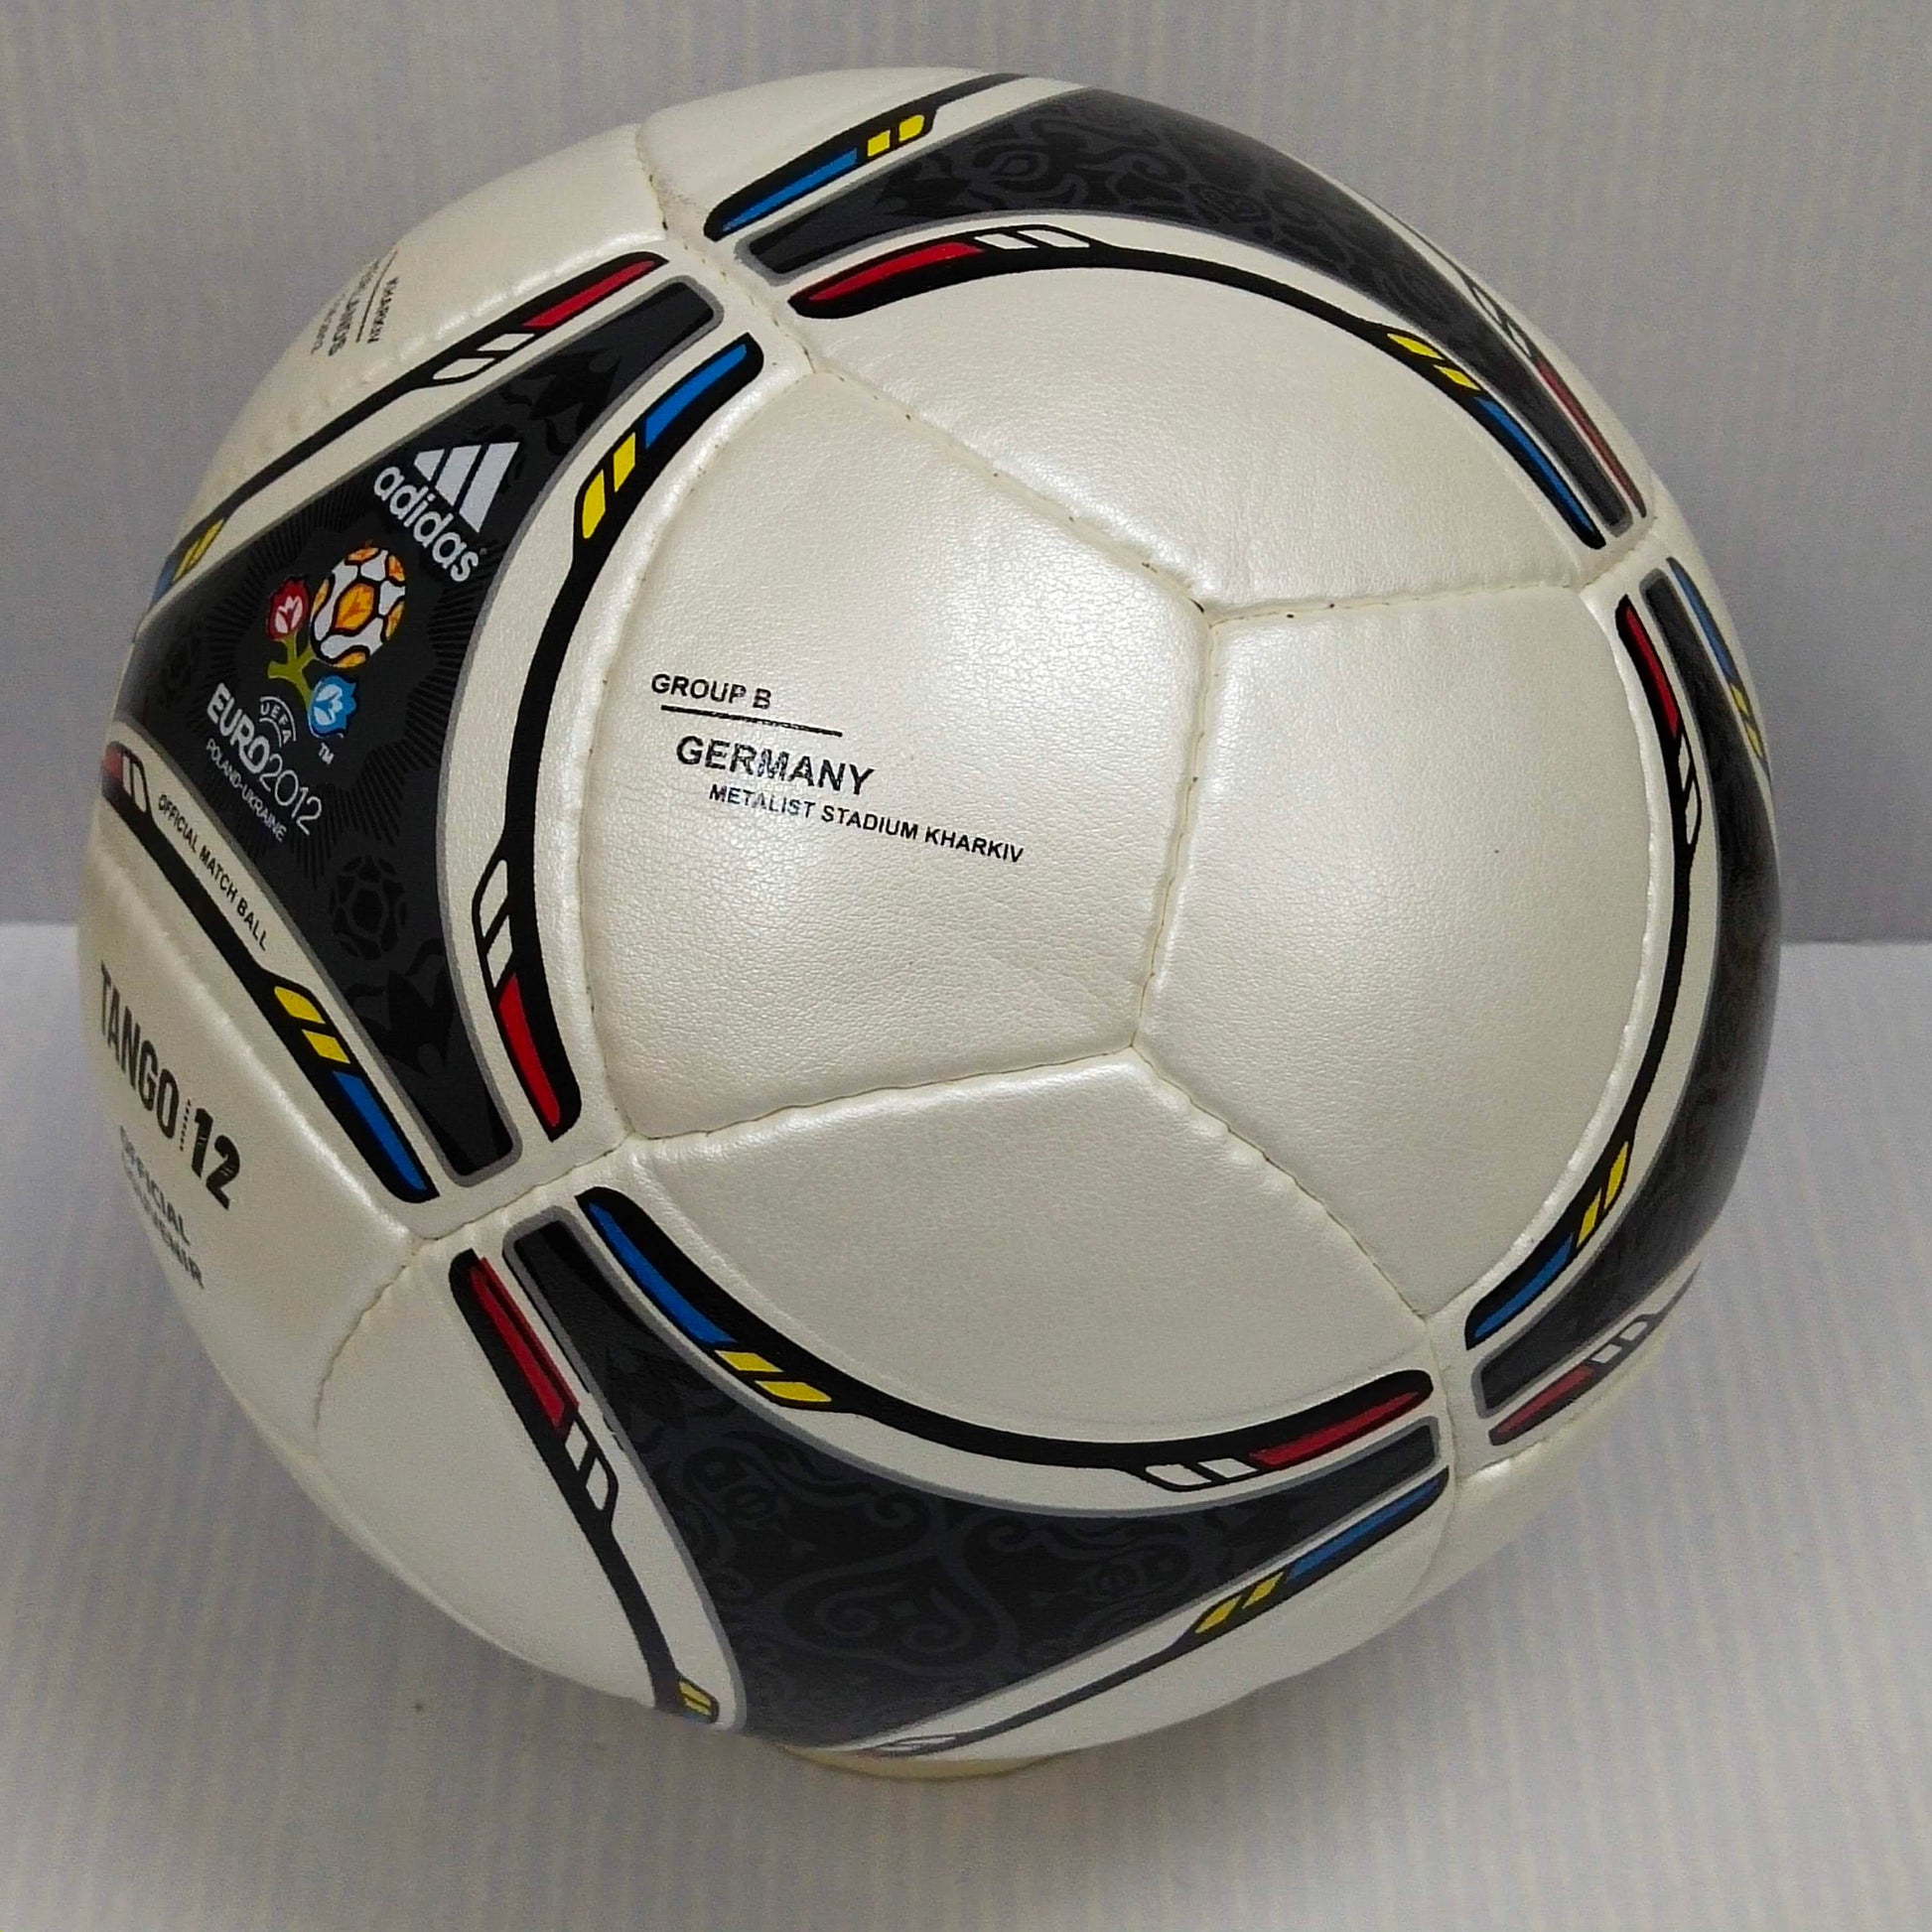 Adidas Tango 12 | 2012 | UEFA Europa League | Official Match Ball | Size 5 02